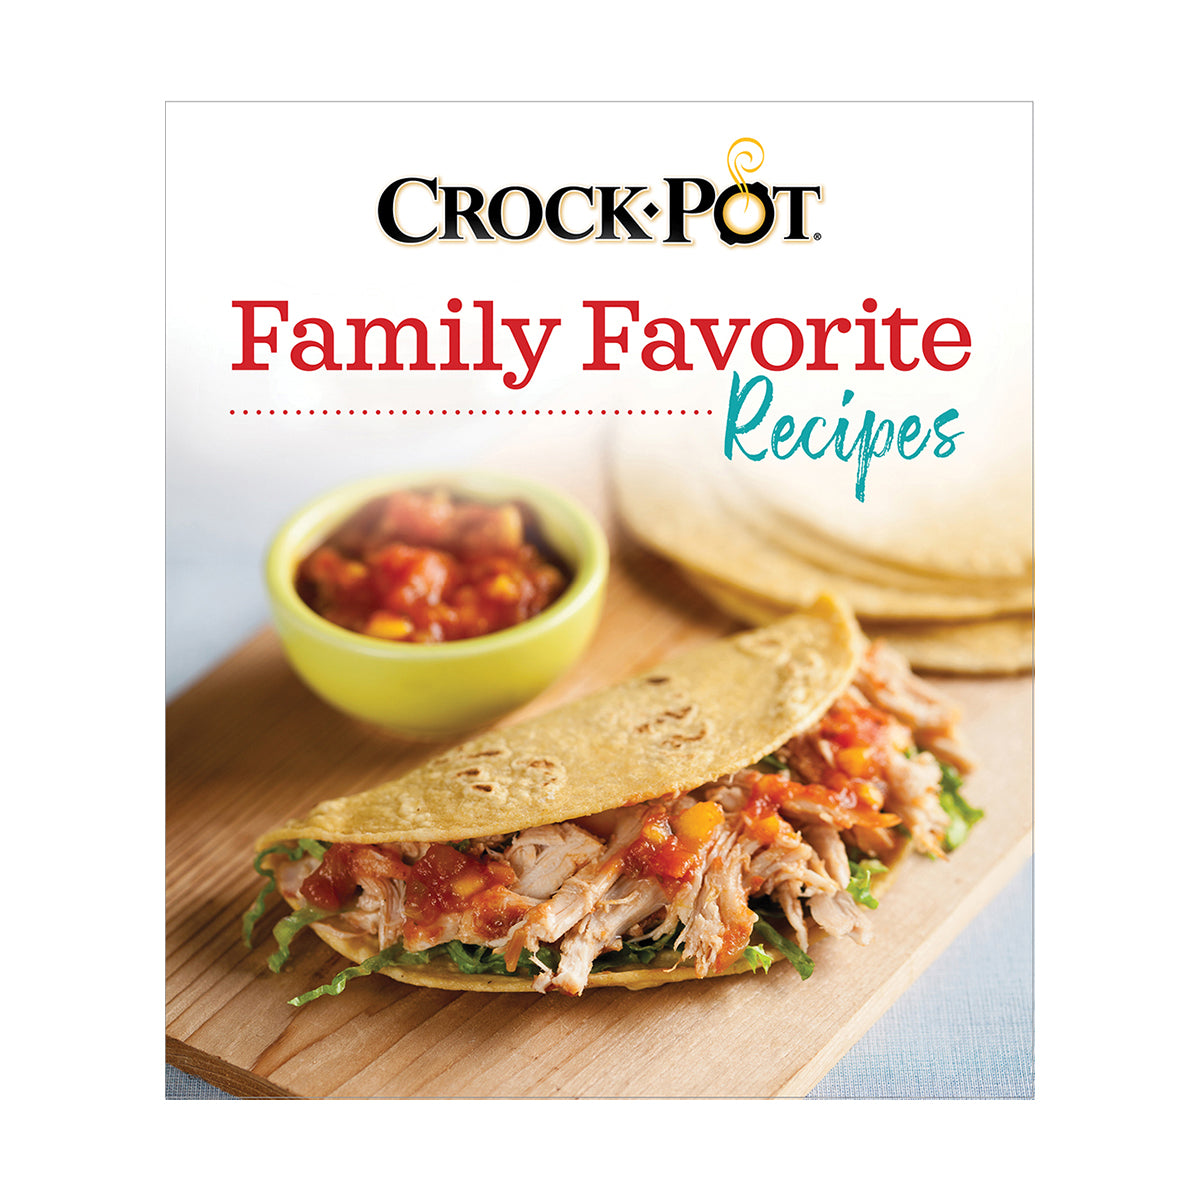 Crockpot Family Favorite Recipes